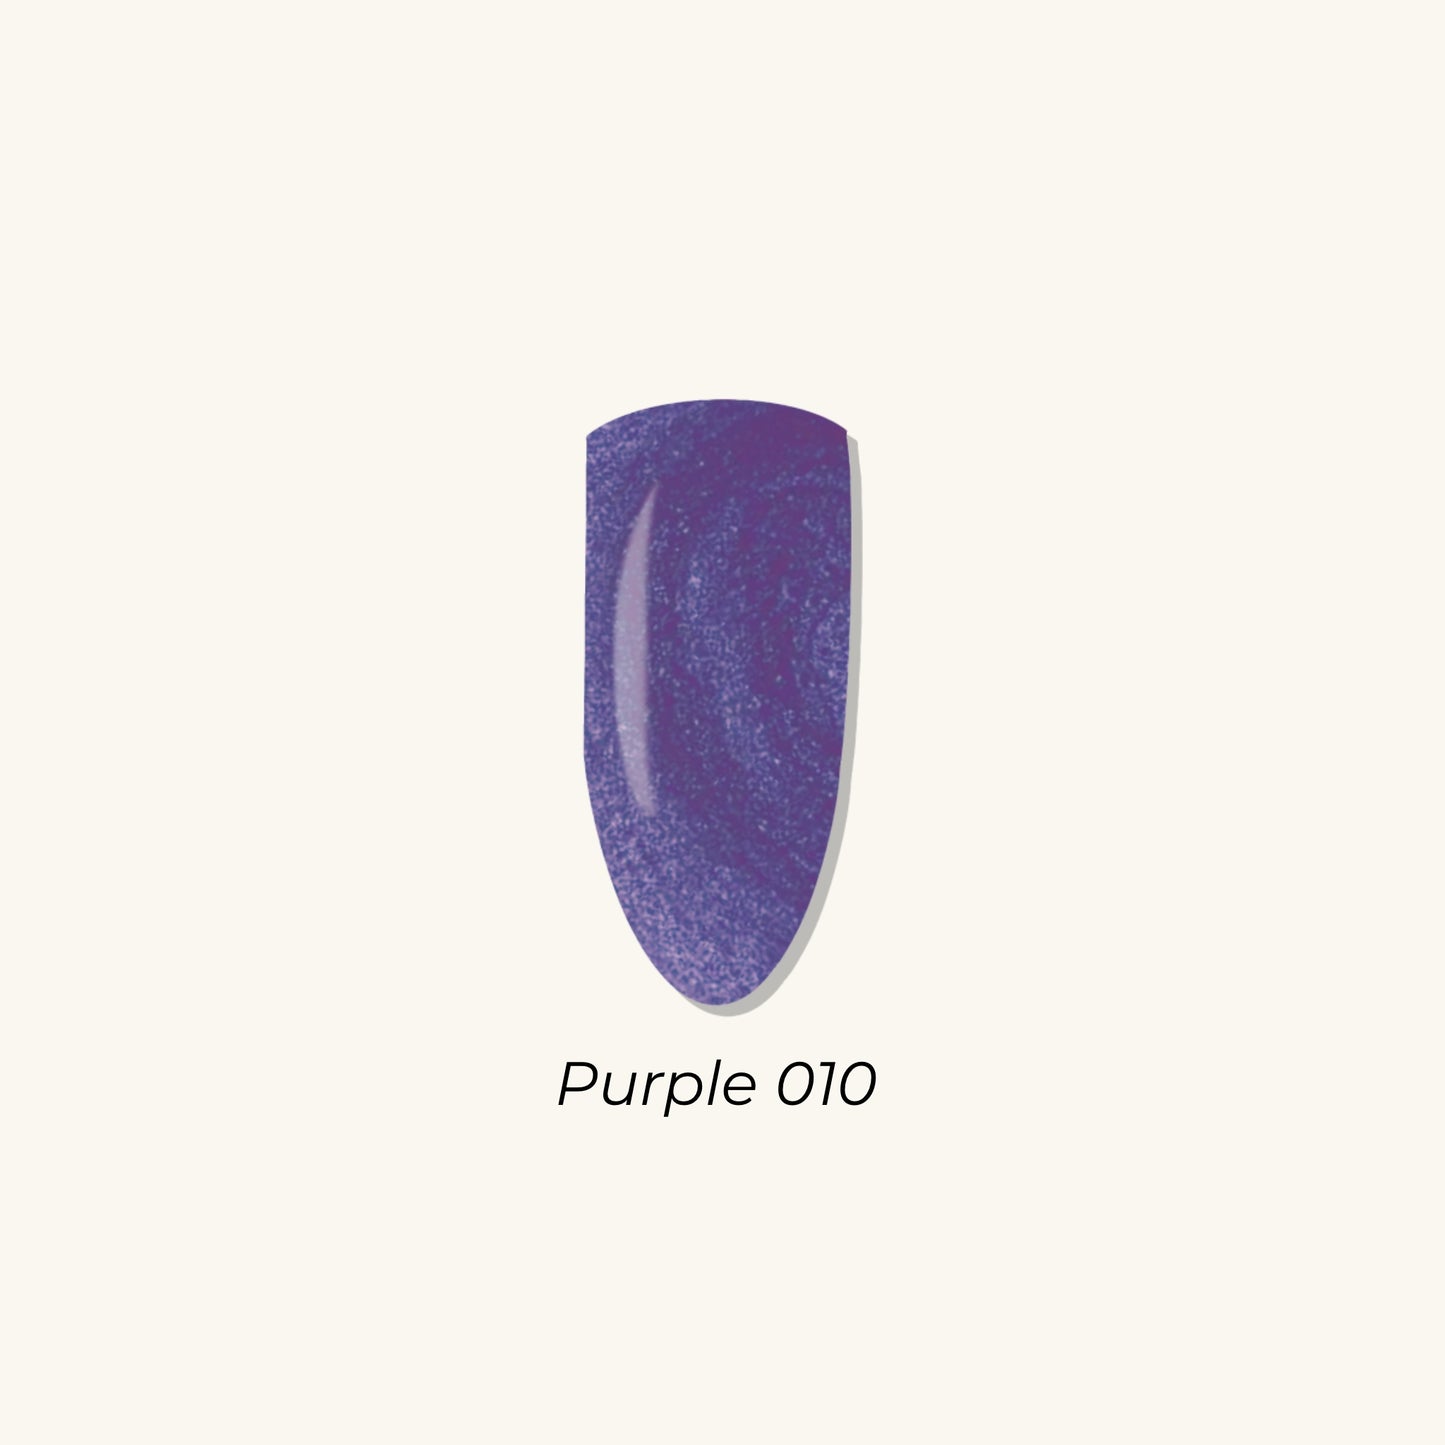 Purple 010